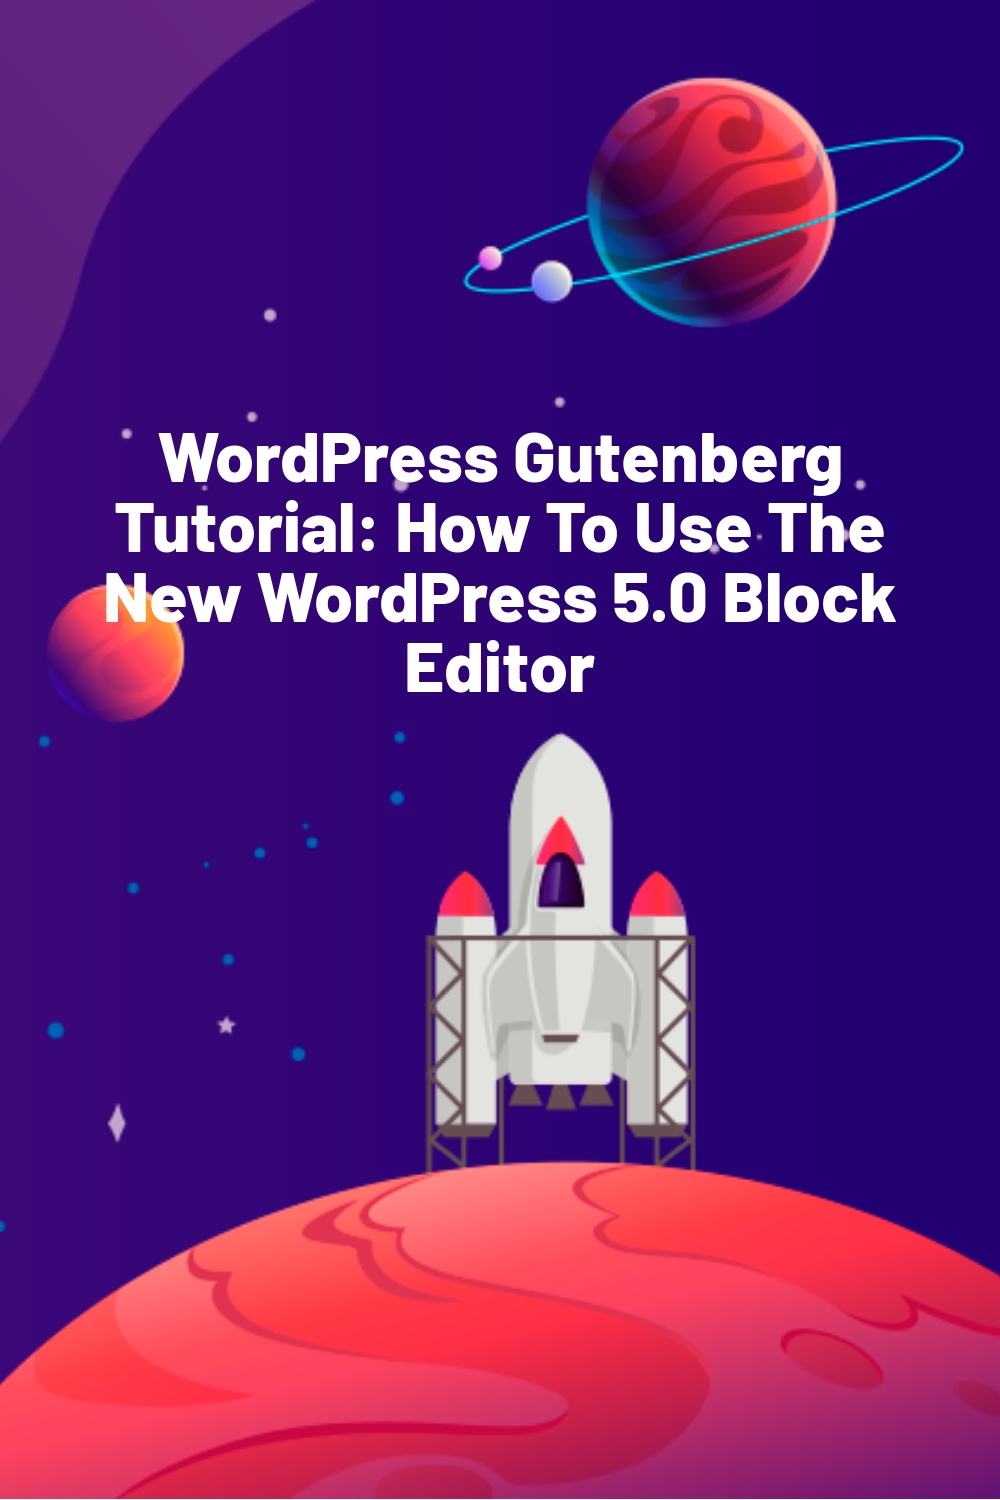 WordPress Gutenberg Tutorial: How To Use The New WordPress 5.0 Block Editor